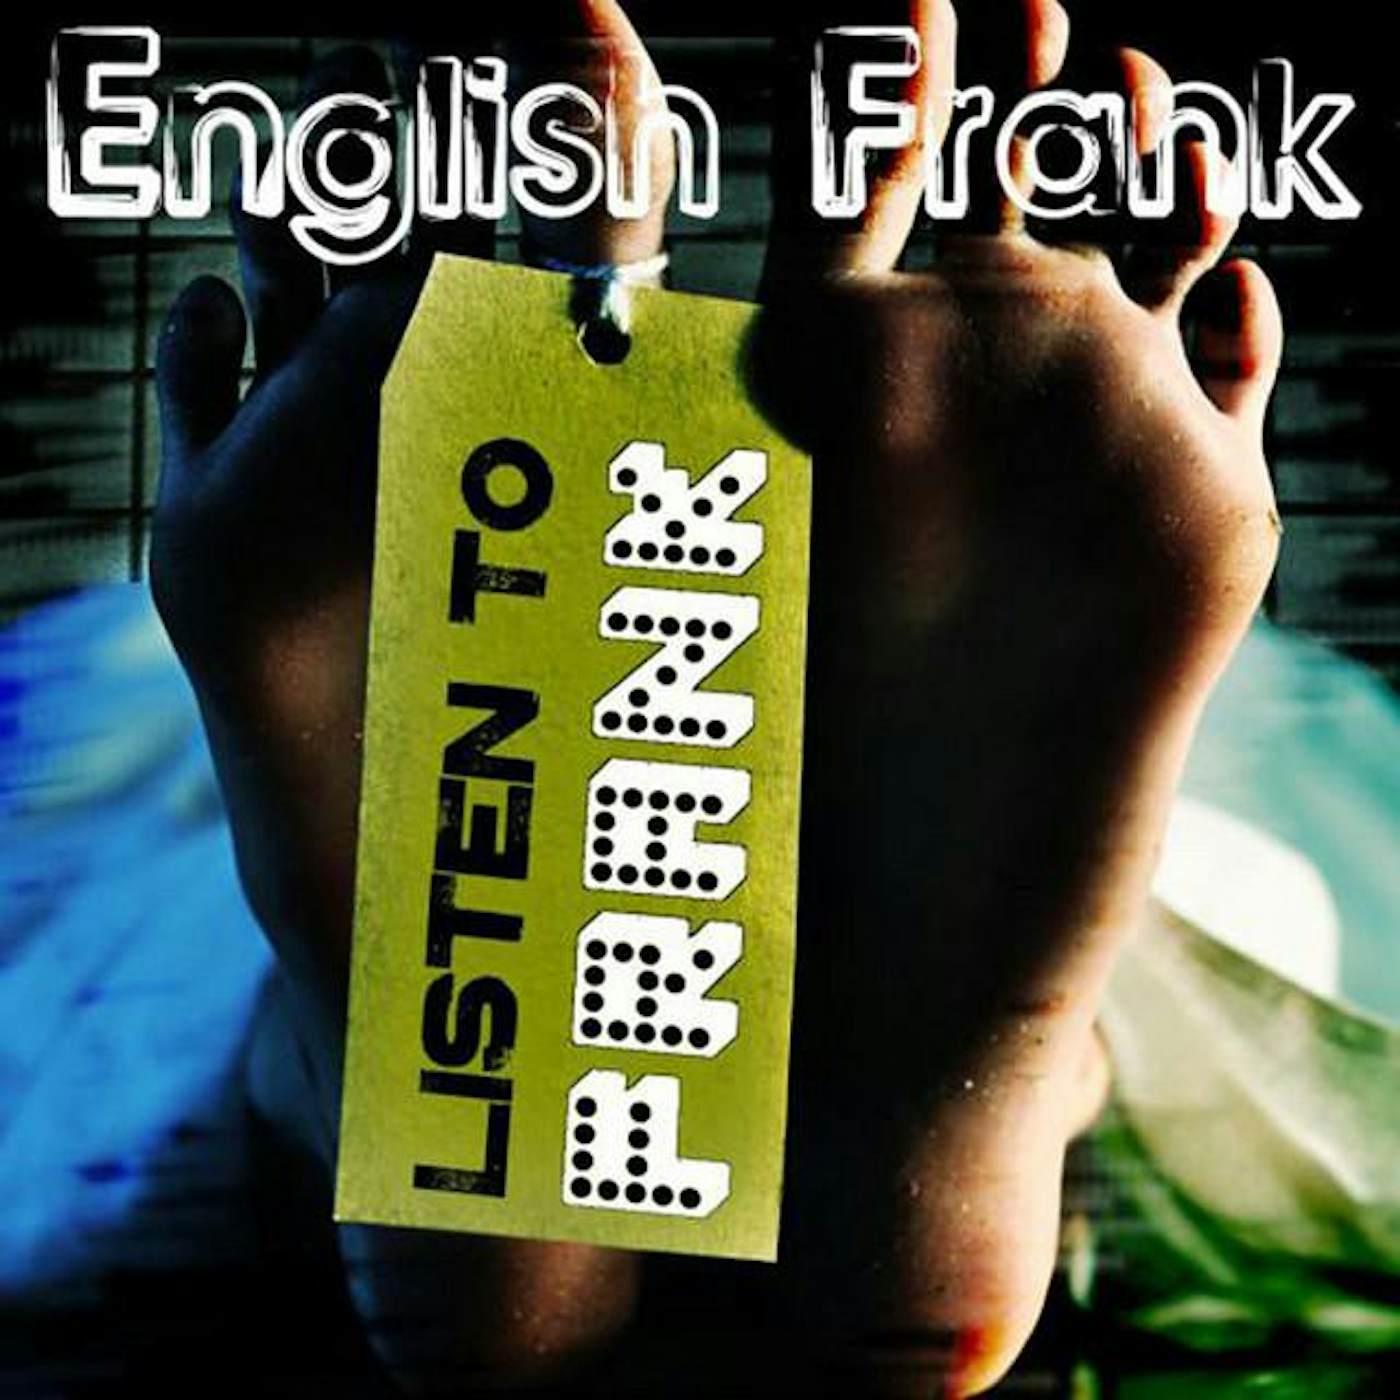 English Frank